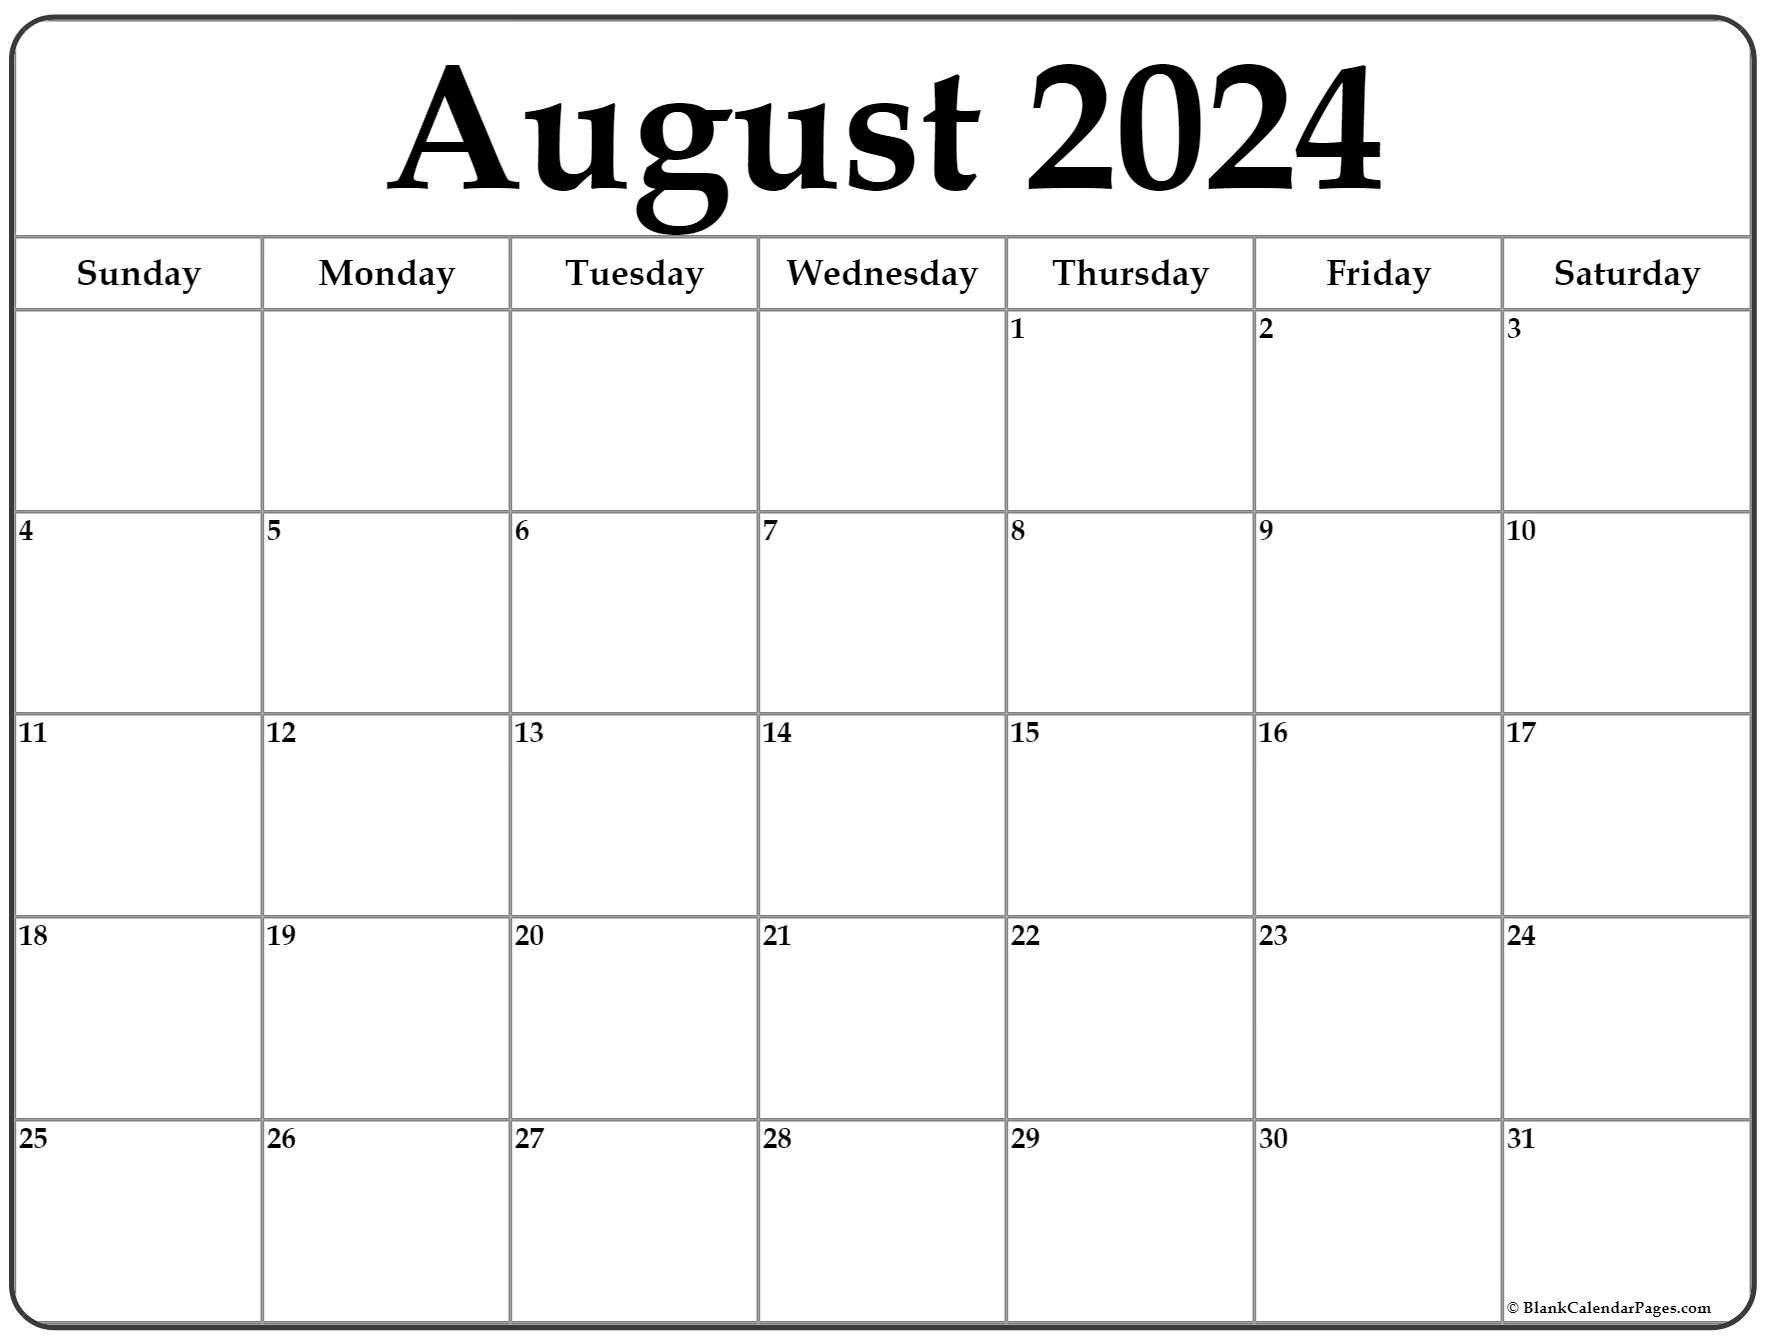 Printable Calendar August 2021 May 2022.August 2022 Calendar Free Printable Calendar